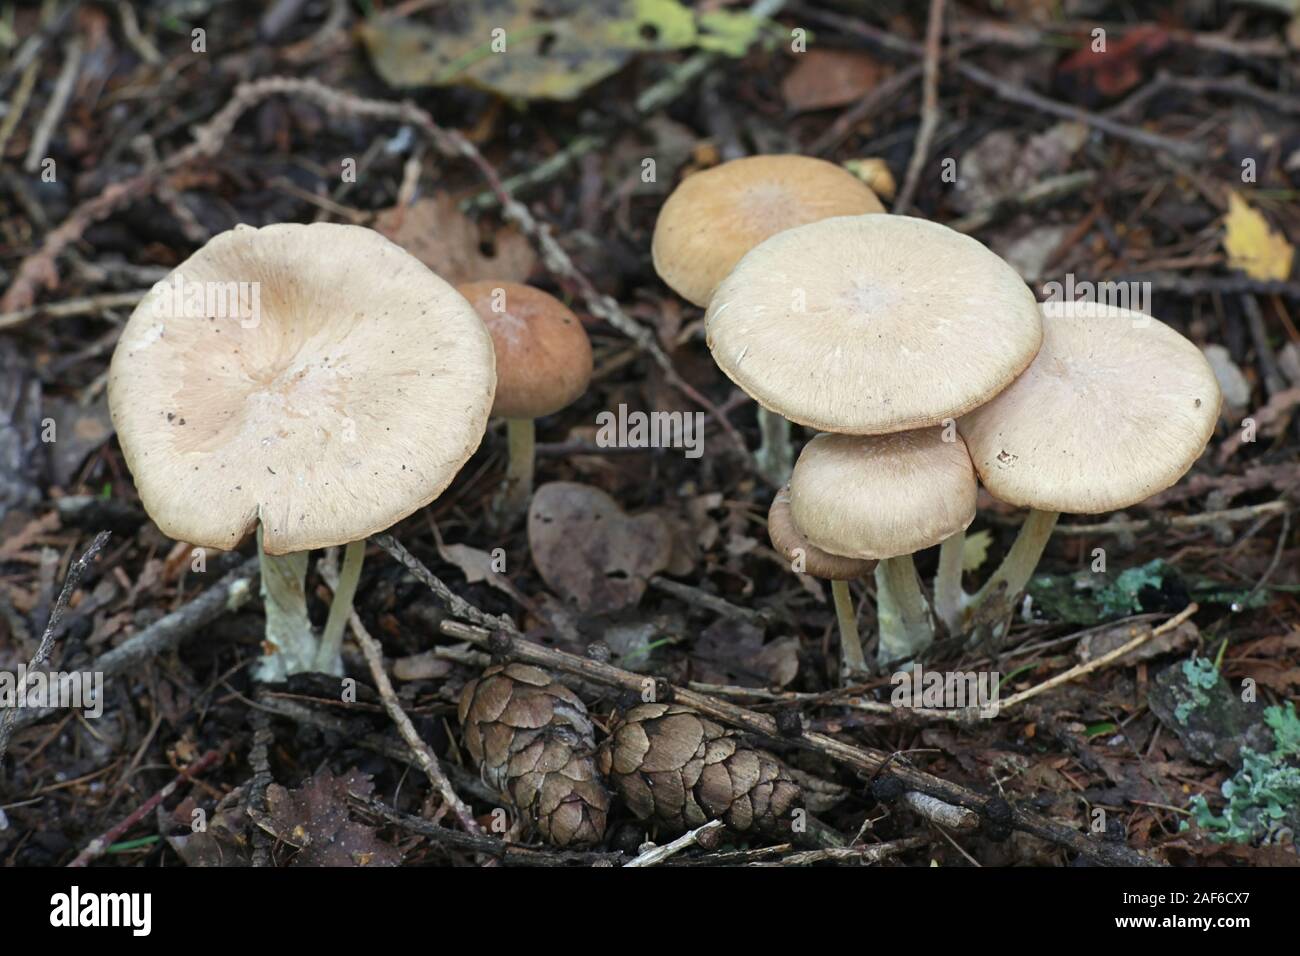 Gymnopus peronatus, known as wood woolly-foot, wild mushroom from Finland Stock Photo